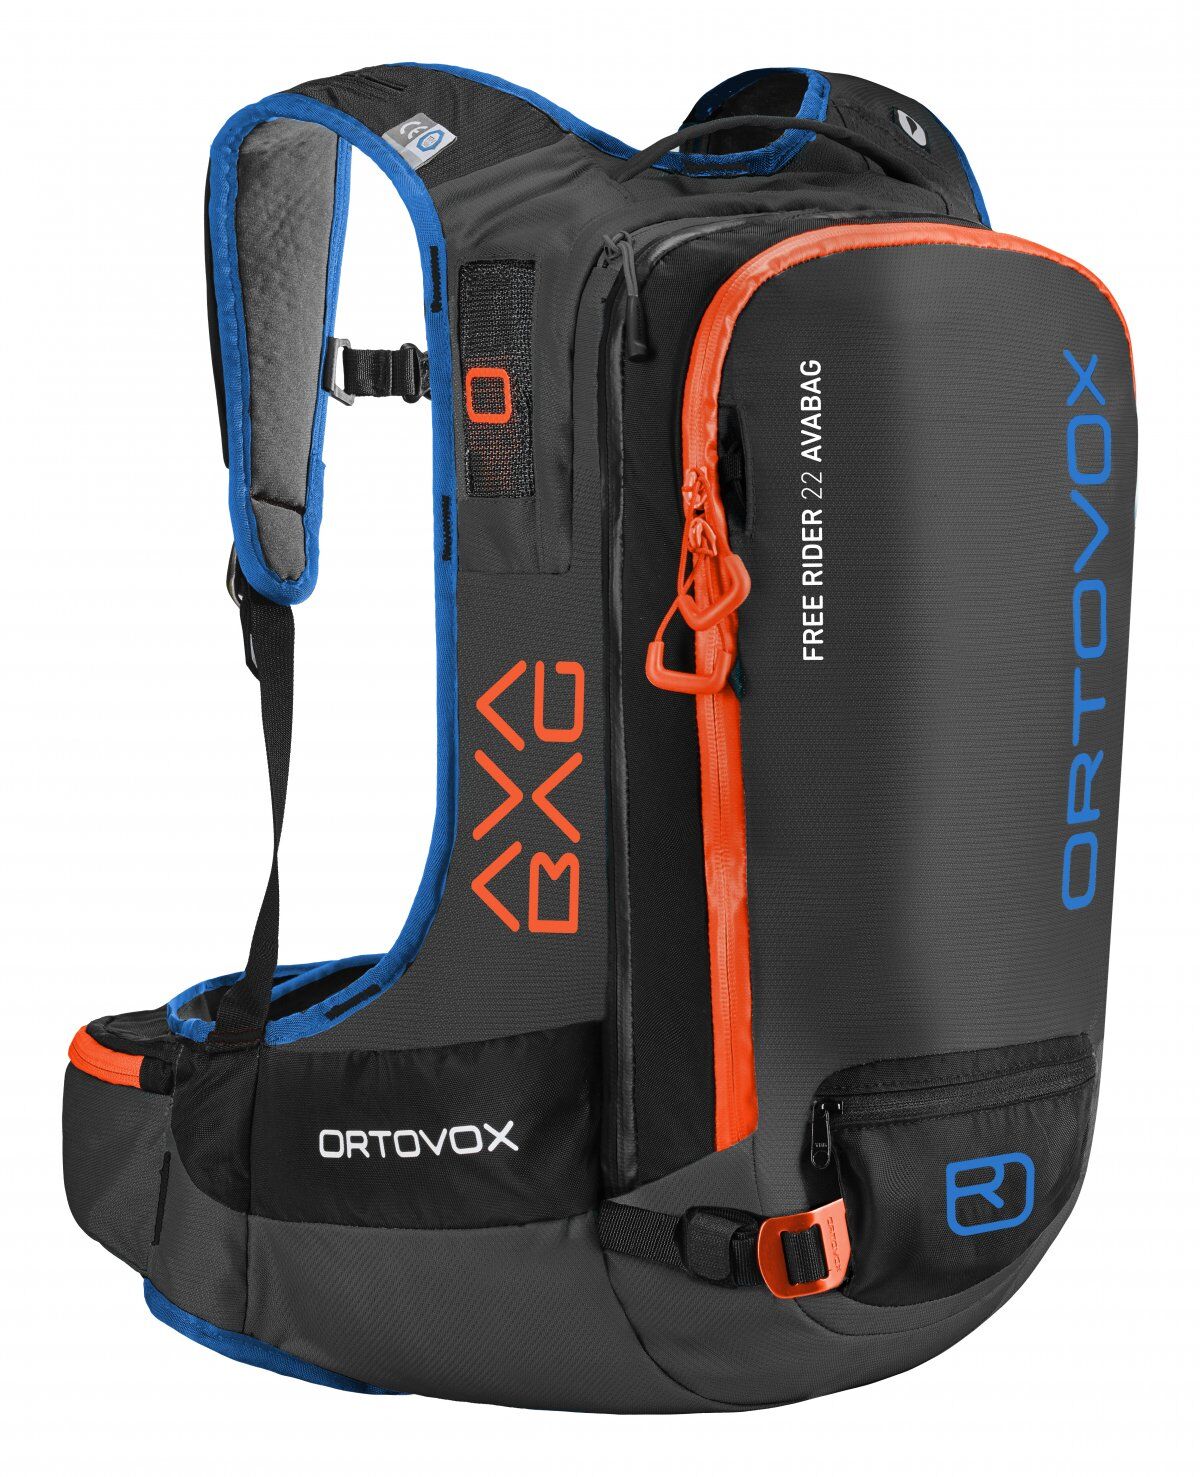 Ortovox - Free Rider 22 Avabag - Avalanche backpack - Men's